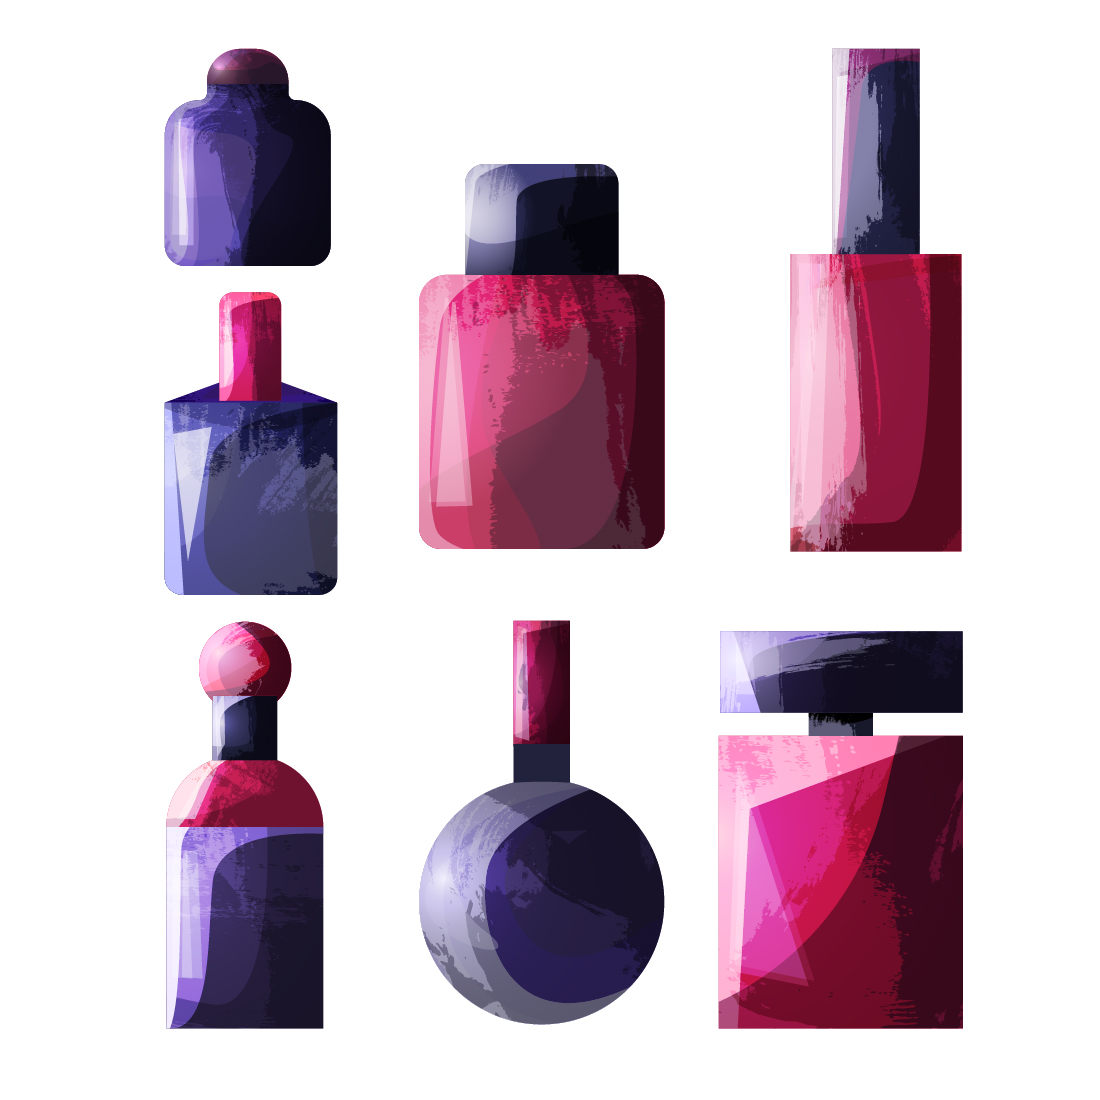 Perfume Bottle Packaging Illustrations cover image.